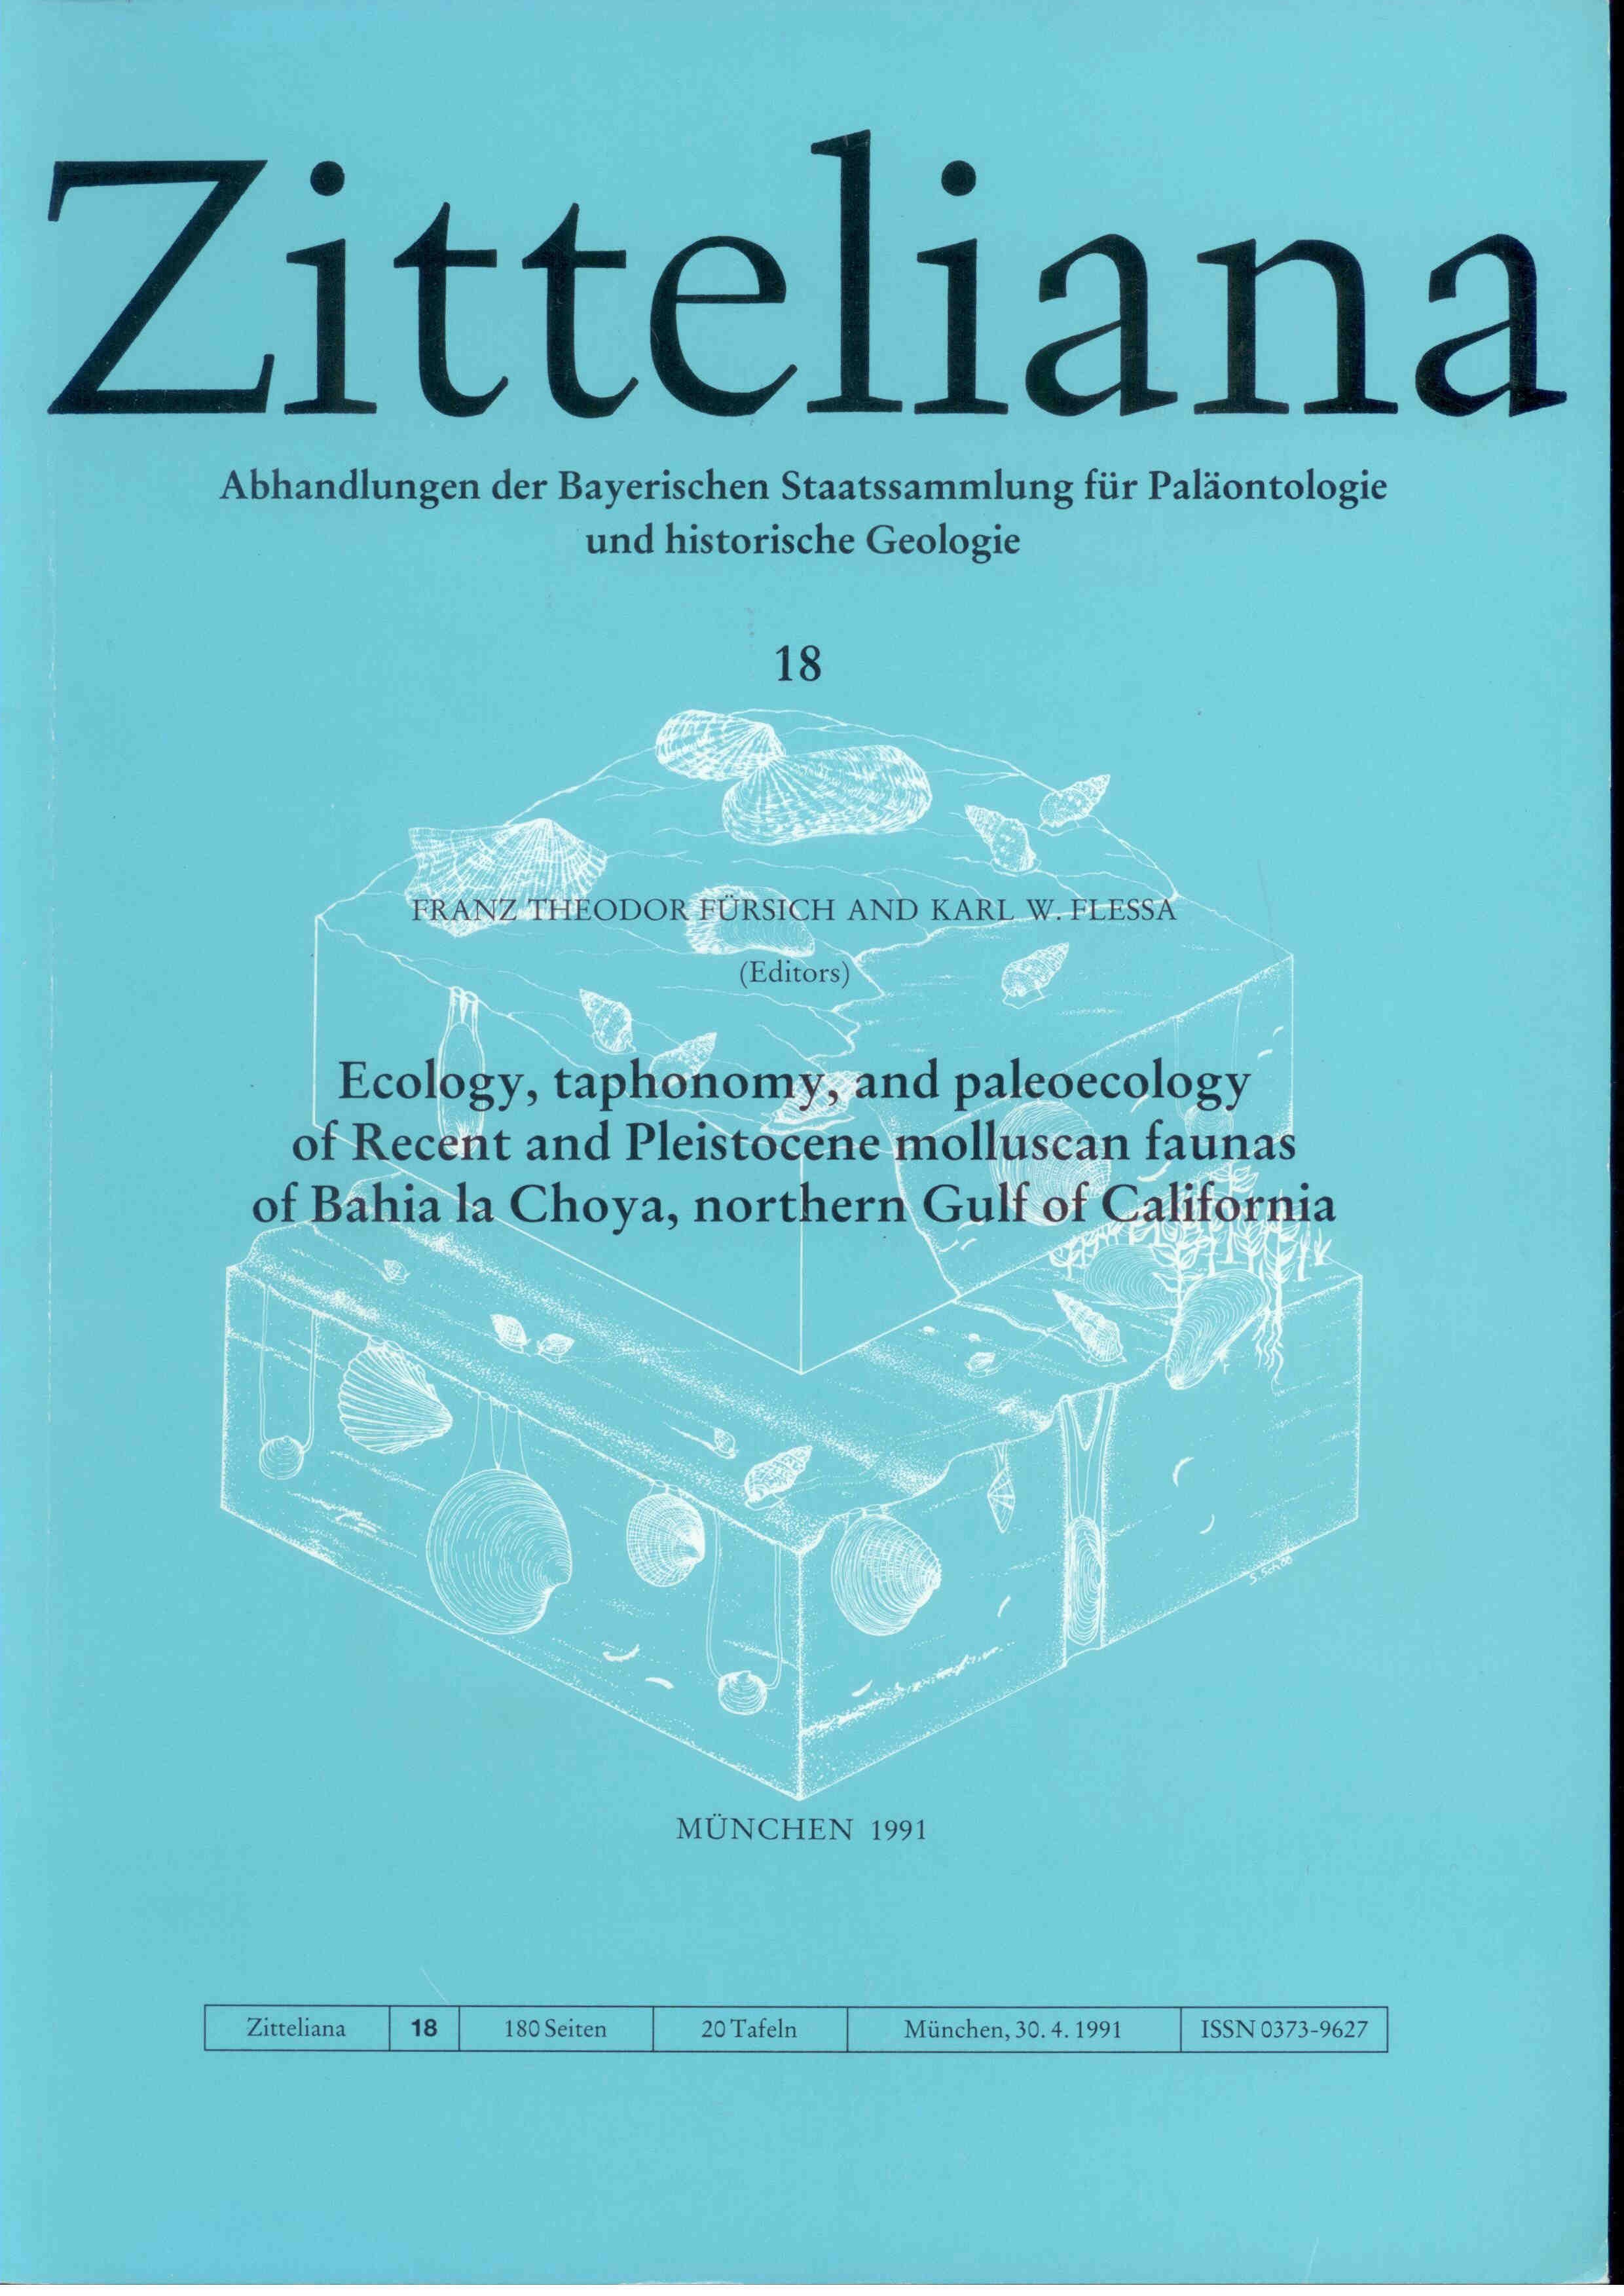 Fürsich F. T., Flessa K. W.: Ecology, taphonomy, and paleoecology of Recent and Pleistocenemolluscan faunas of Bahia la Choya, nothern Gulf of California.  ZITTELIANA 18